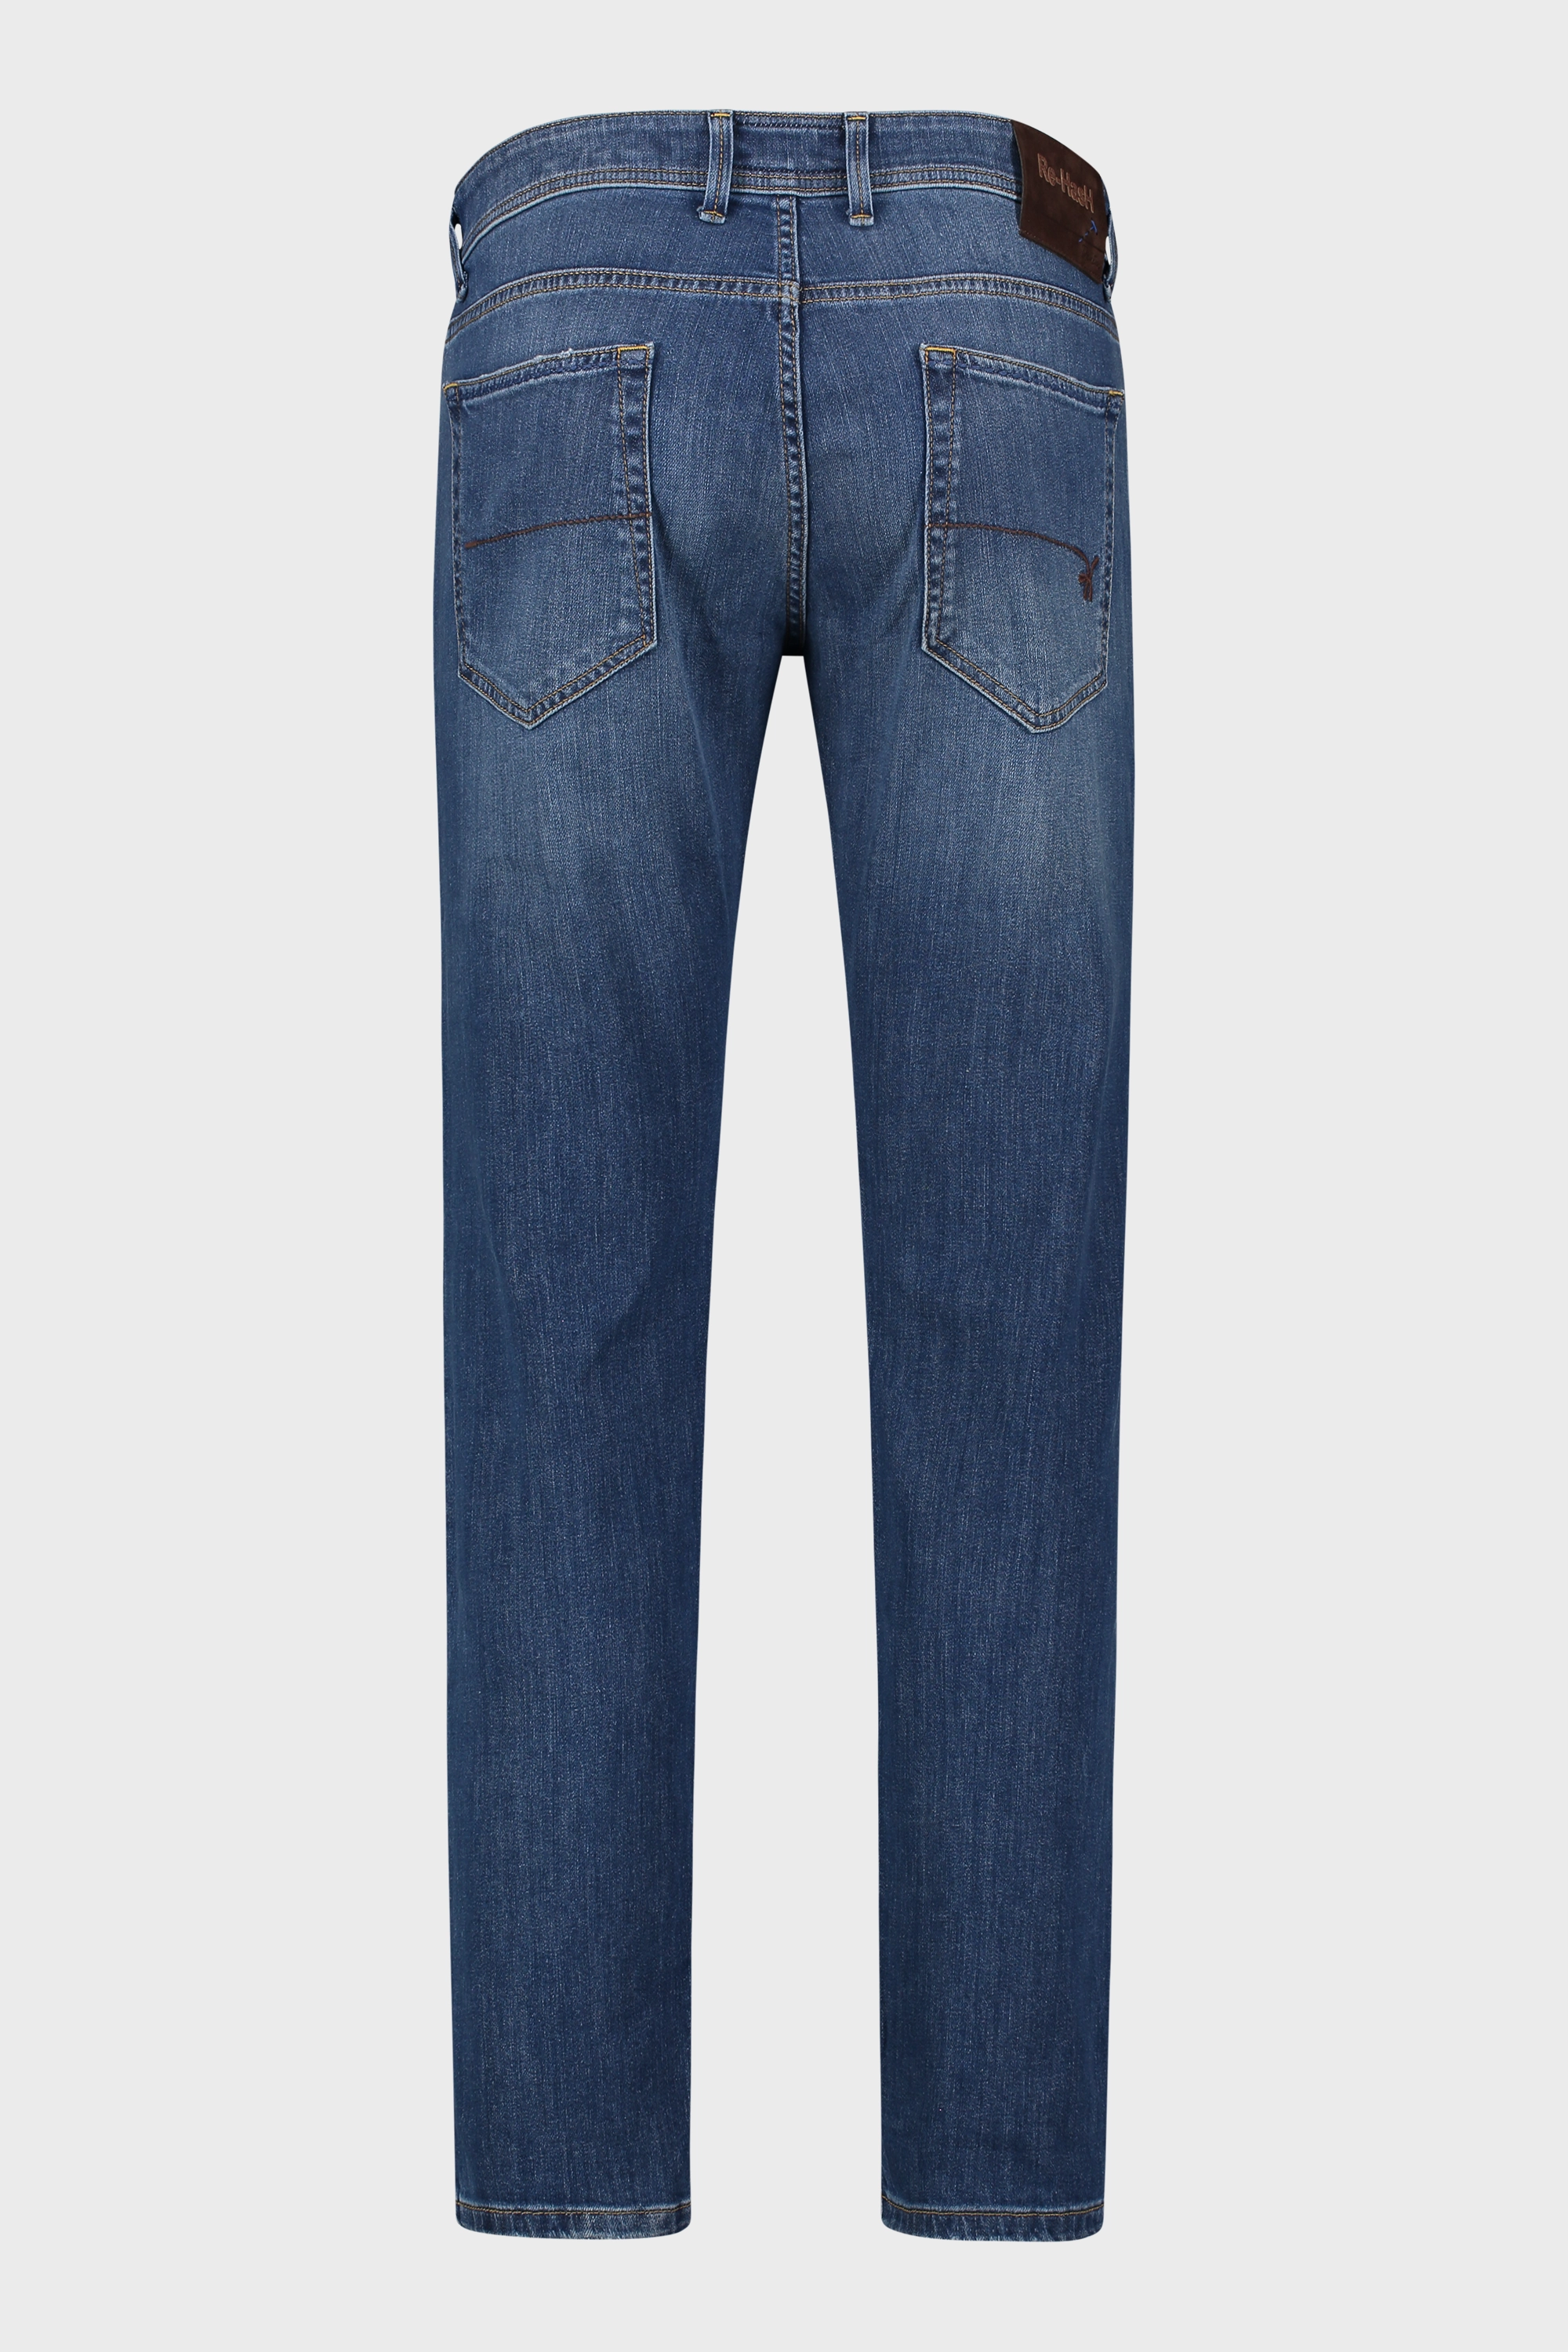 Zara Skinny Jeans & trousers - Men - Philippines price